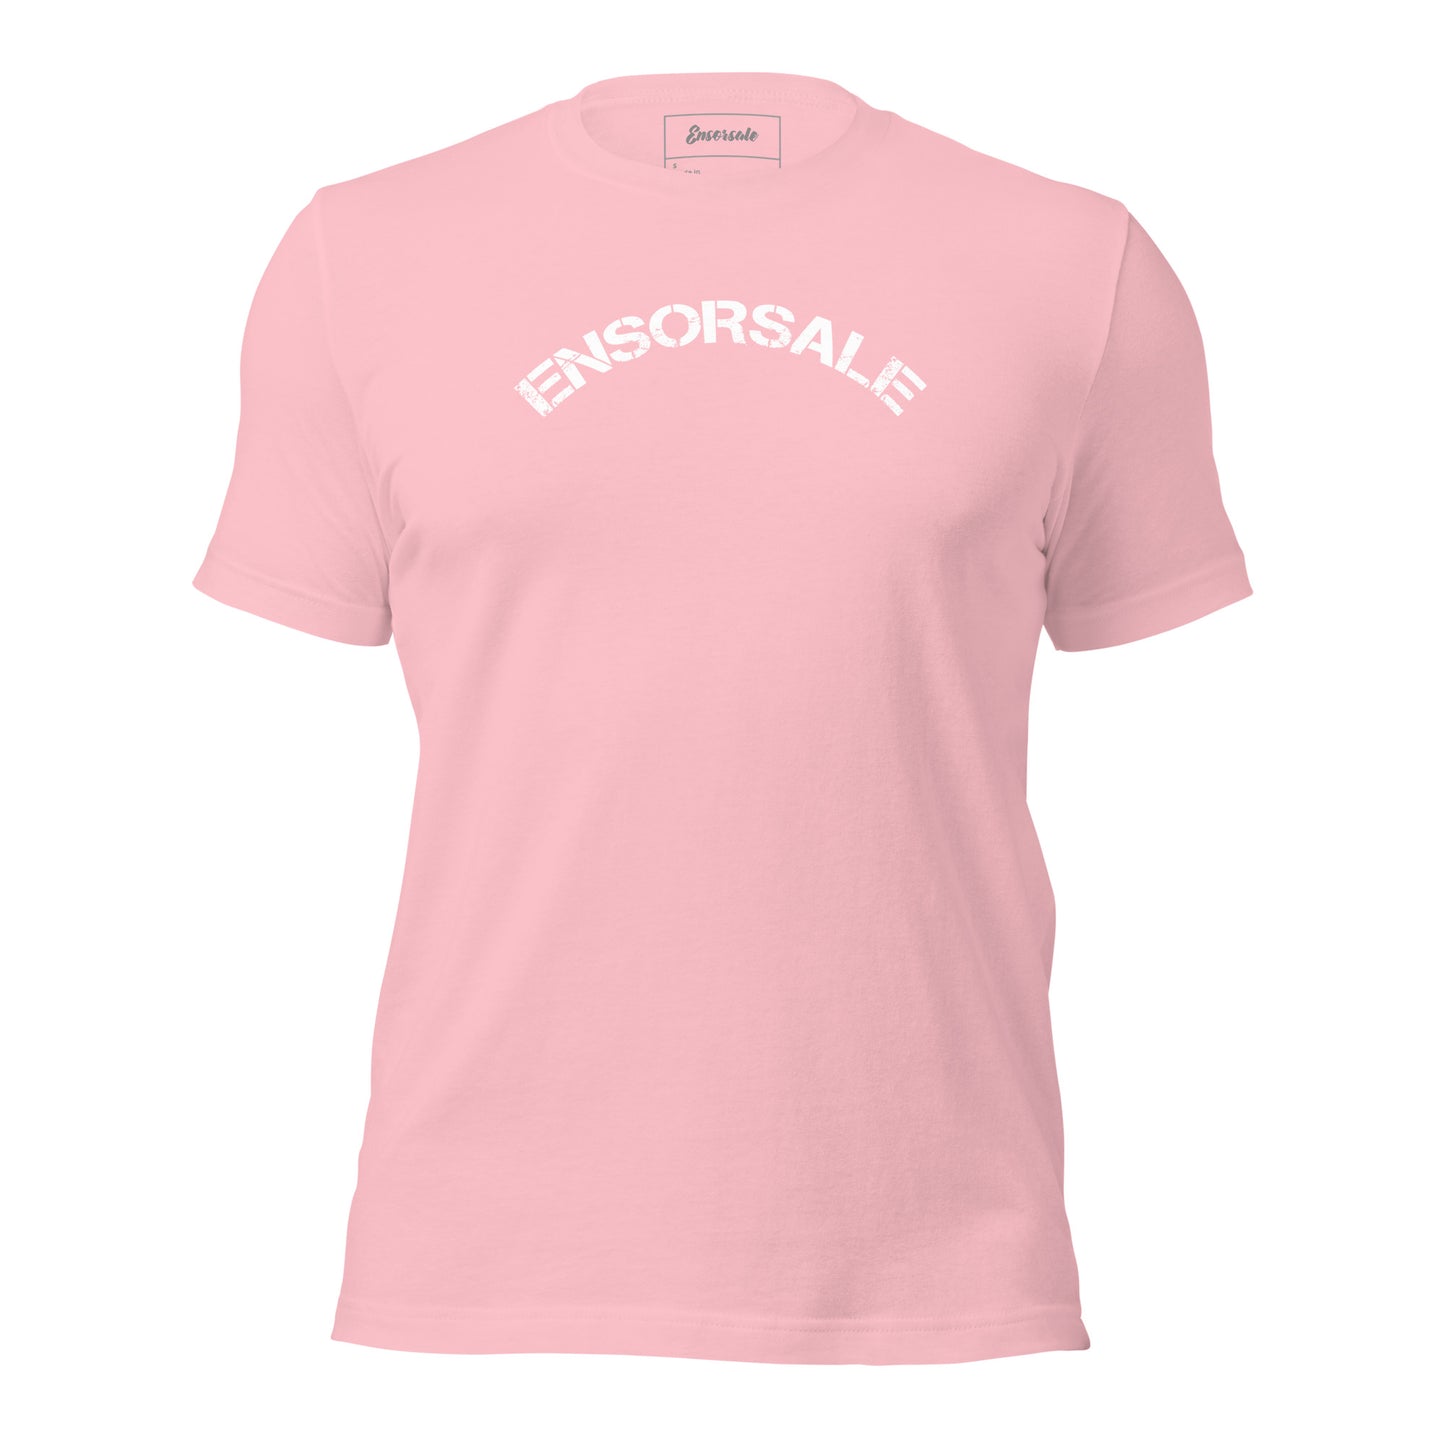 Ensorsale Curved White Logo Premium T-Shirt